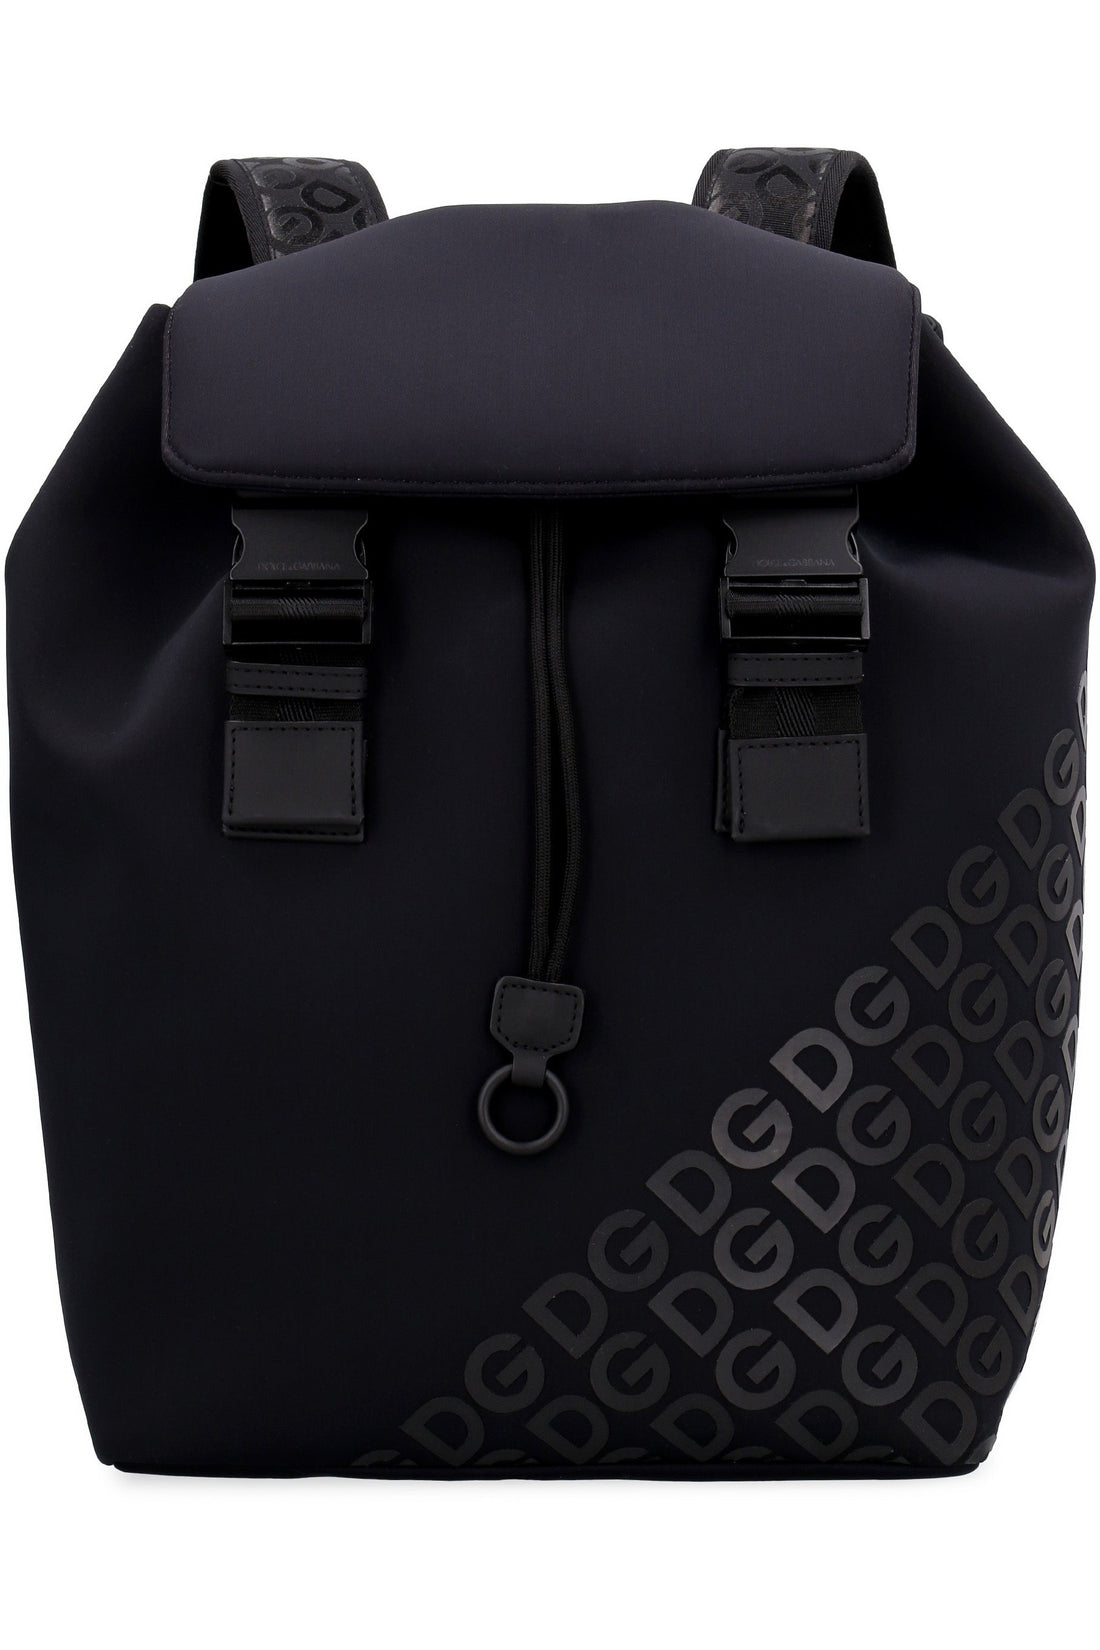 Dolce & Gabbana-OUTLET-SALE-Millennials printed neoprene backpack-ARCHIVIST